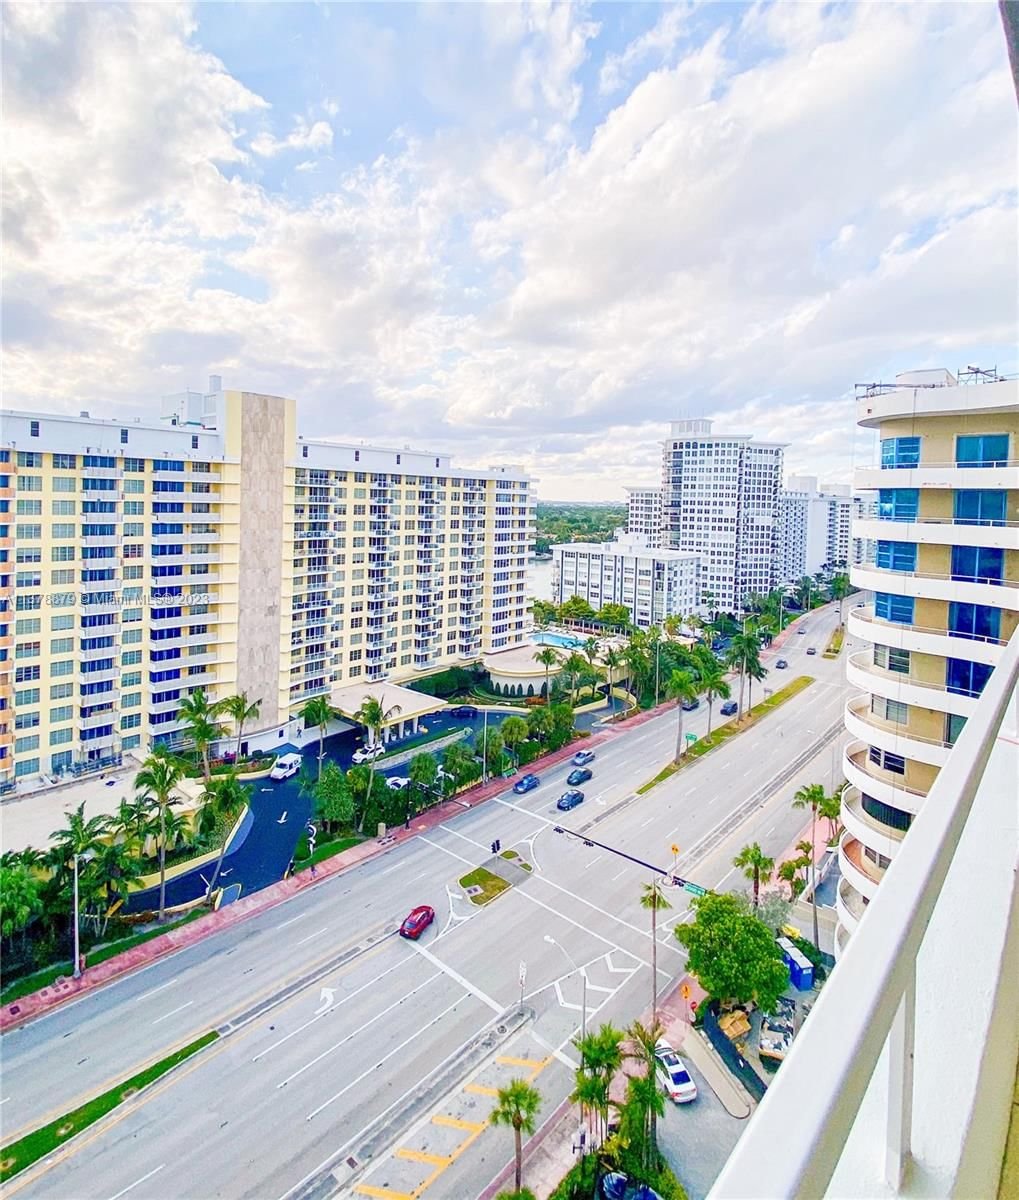 Real estate property located at 5555 Collins Ave #16V, Miami-Dade County, Miami Beach, FL